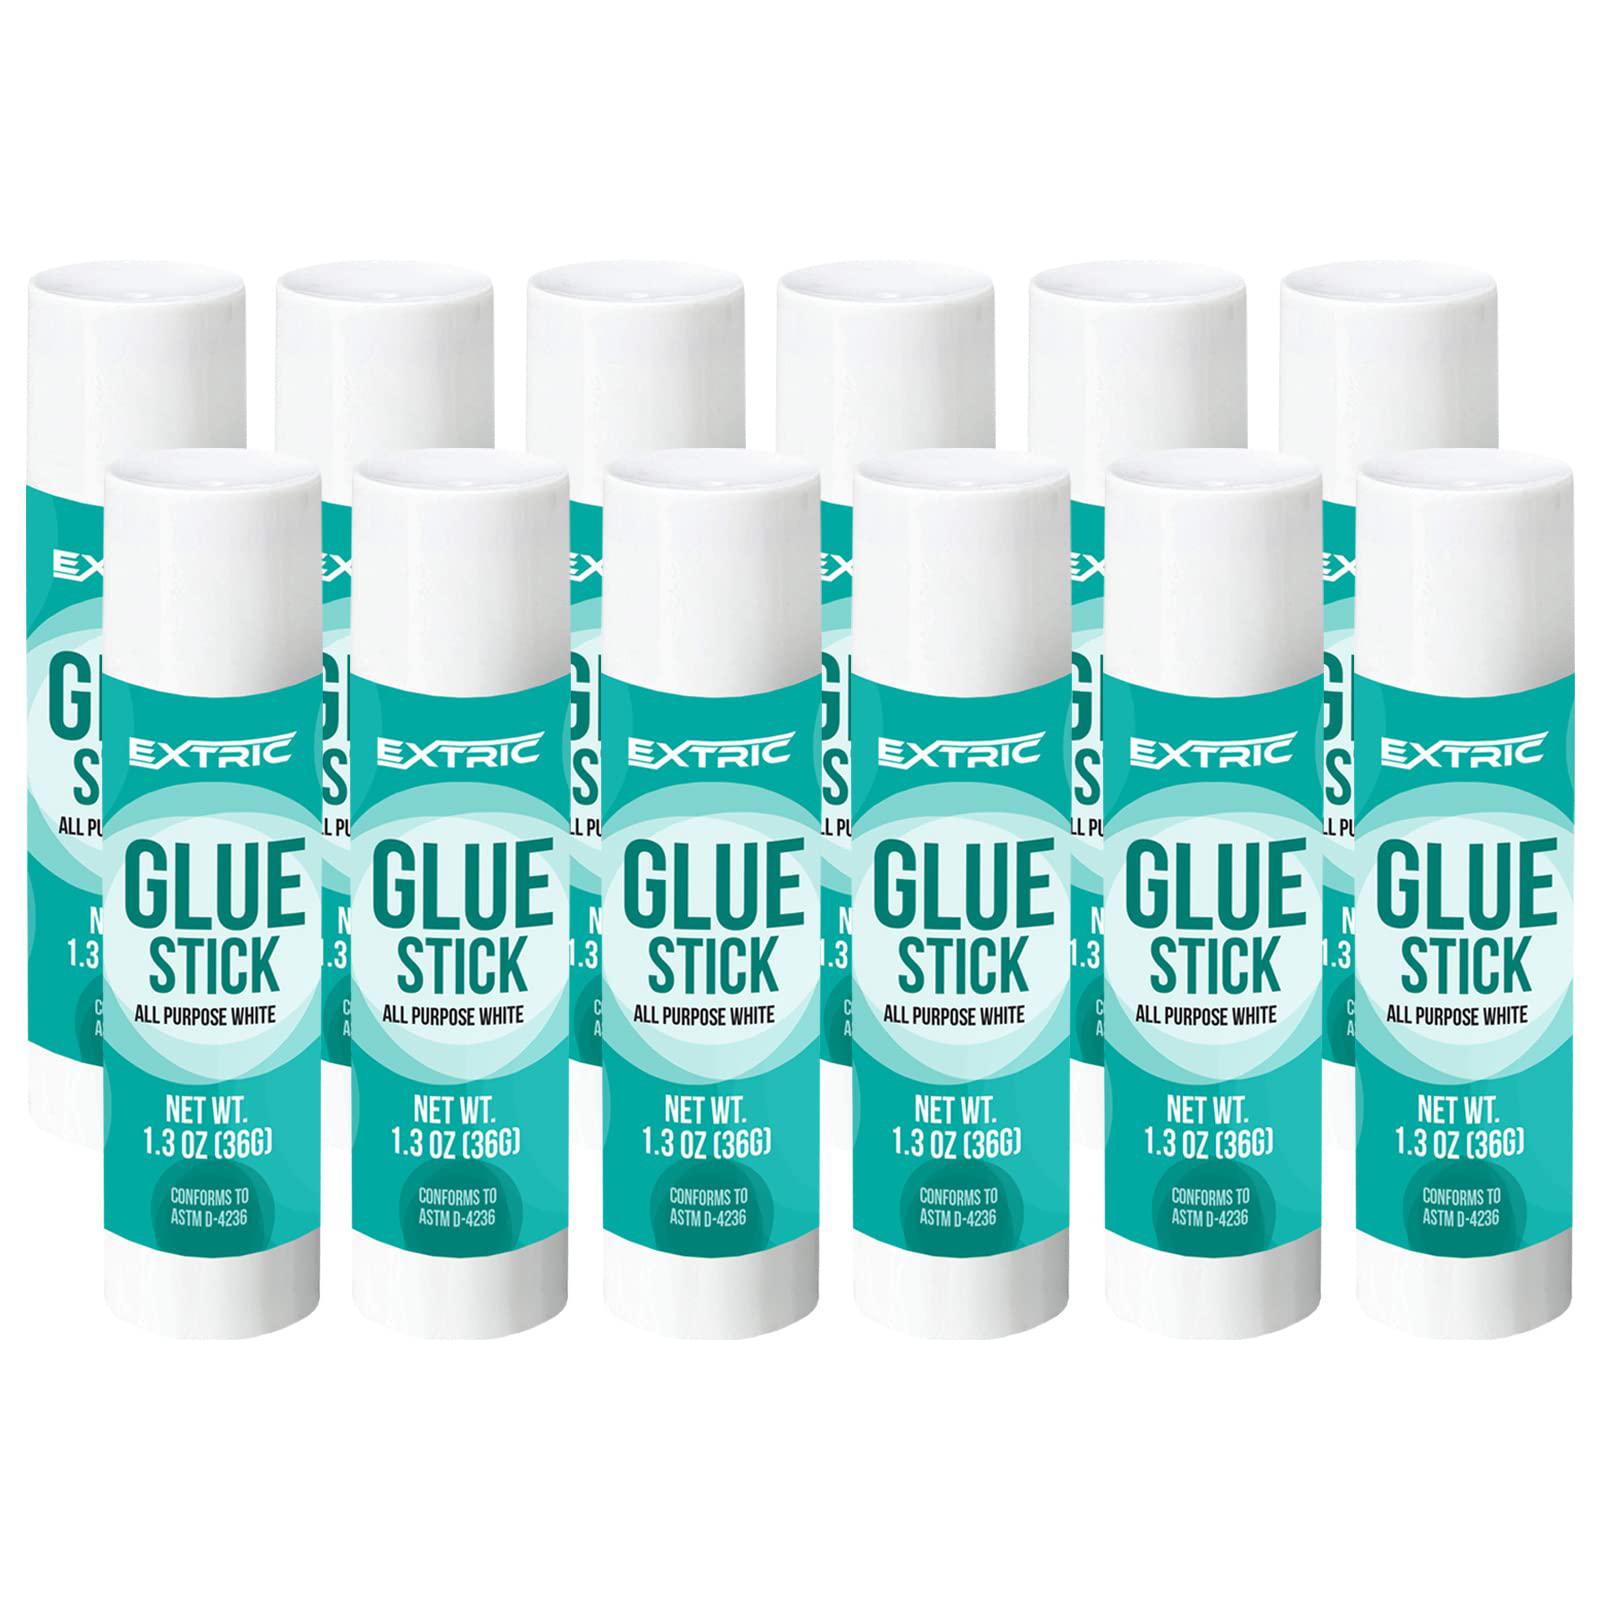 EXTRIc glue sticks 1.3 ounce - 12 count glue stick, all purpose